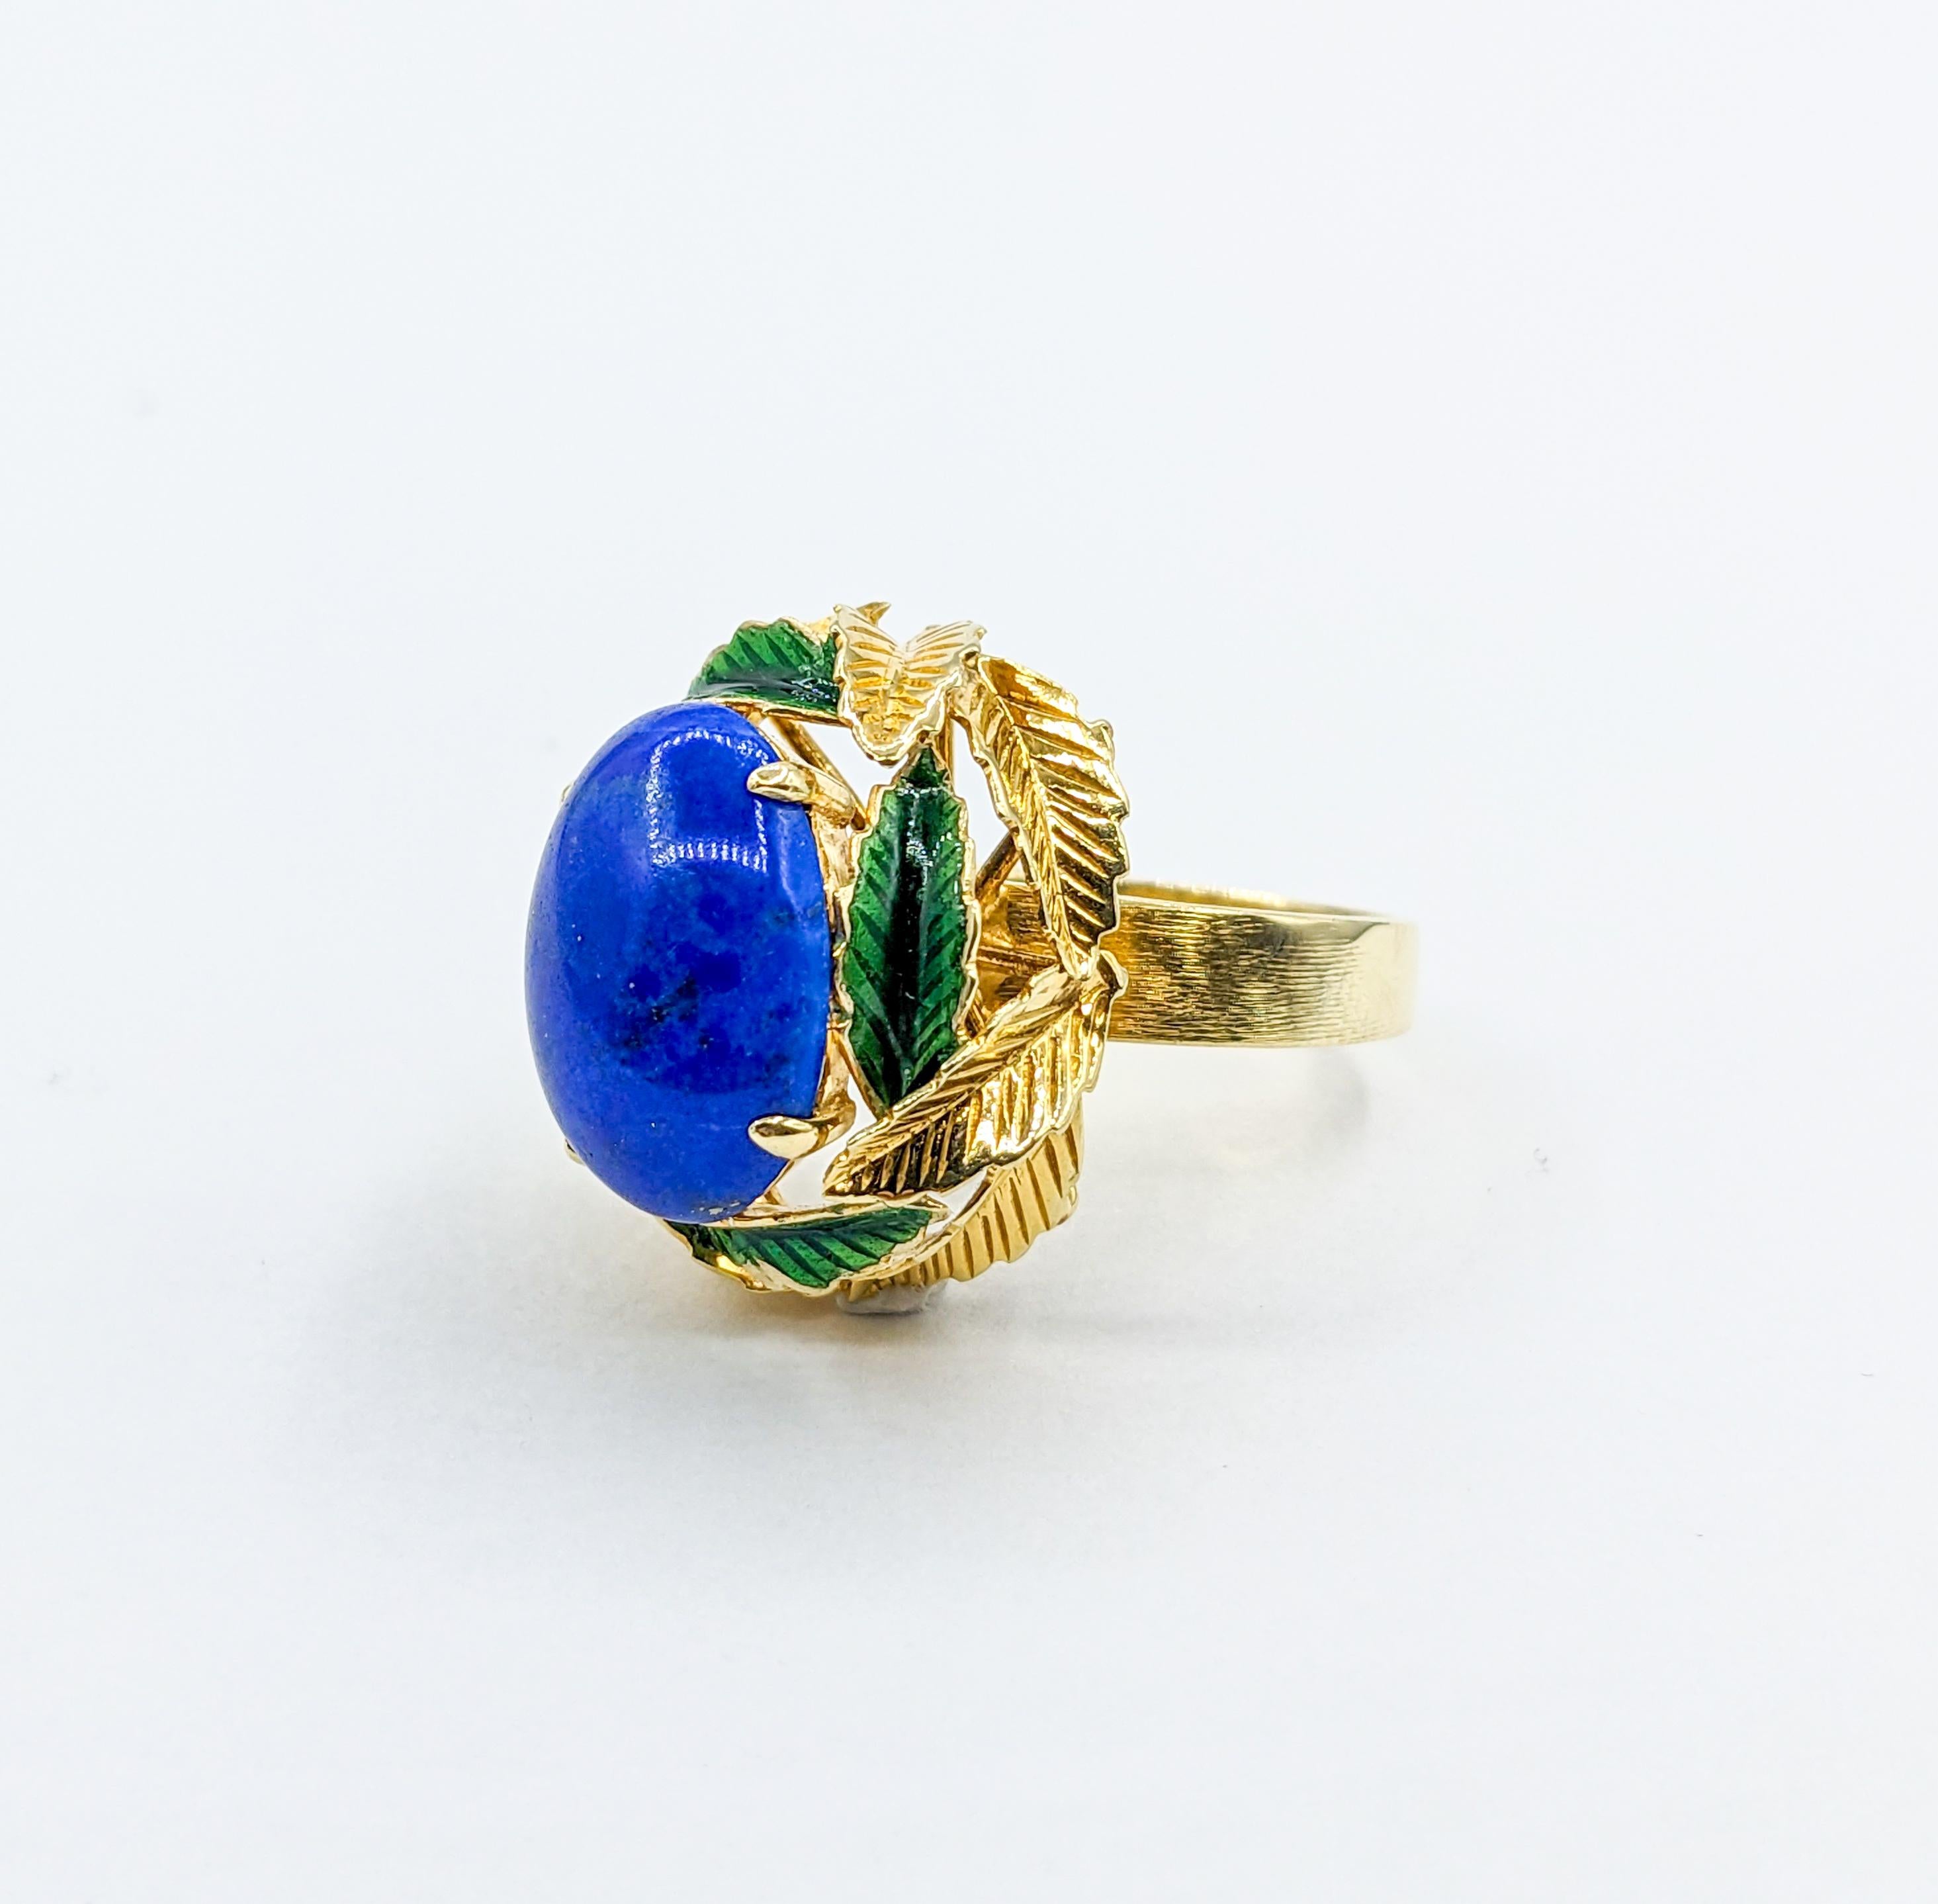  Lapis Cabochon Ring with Enamel Leaf Details For Sale 4